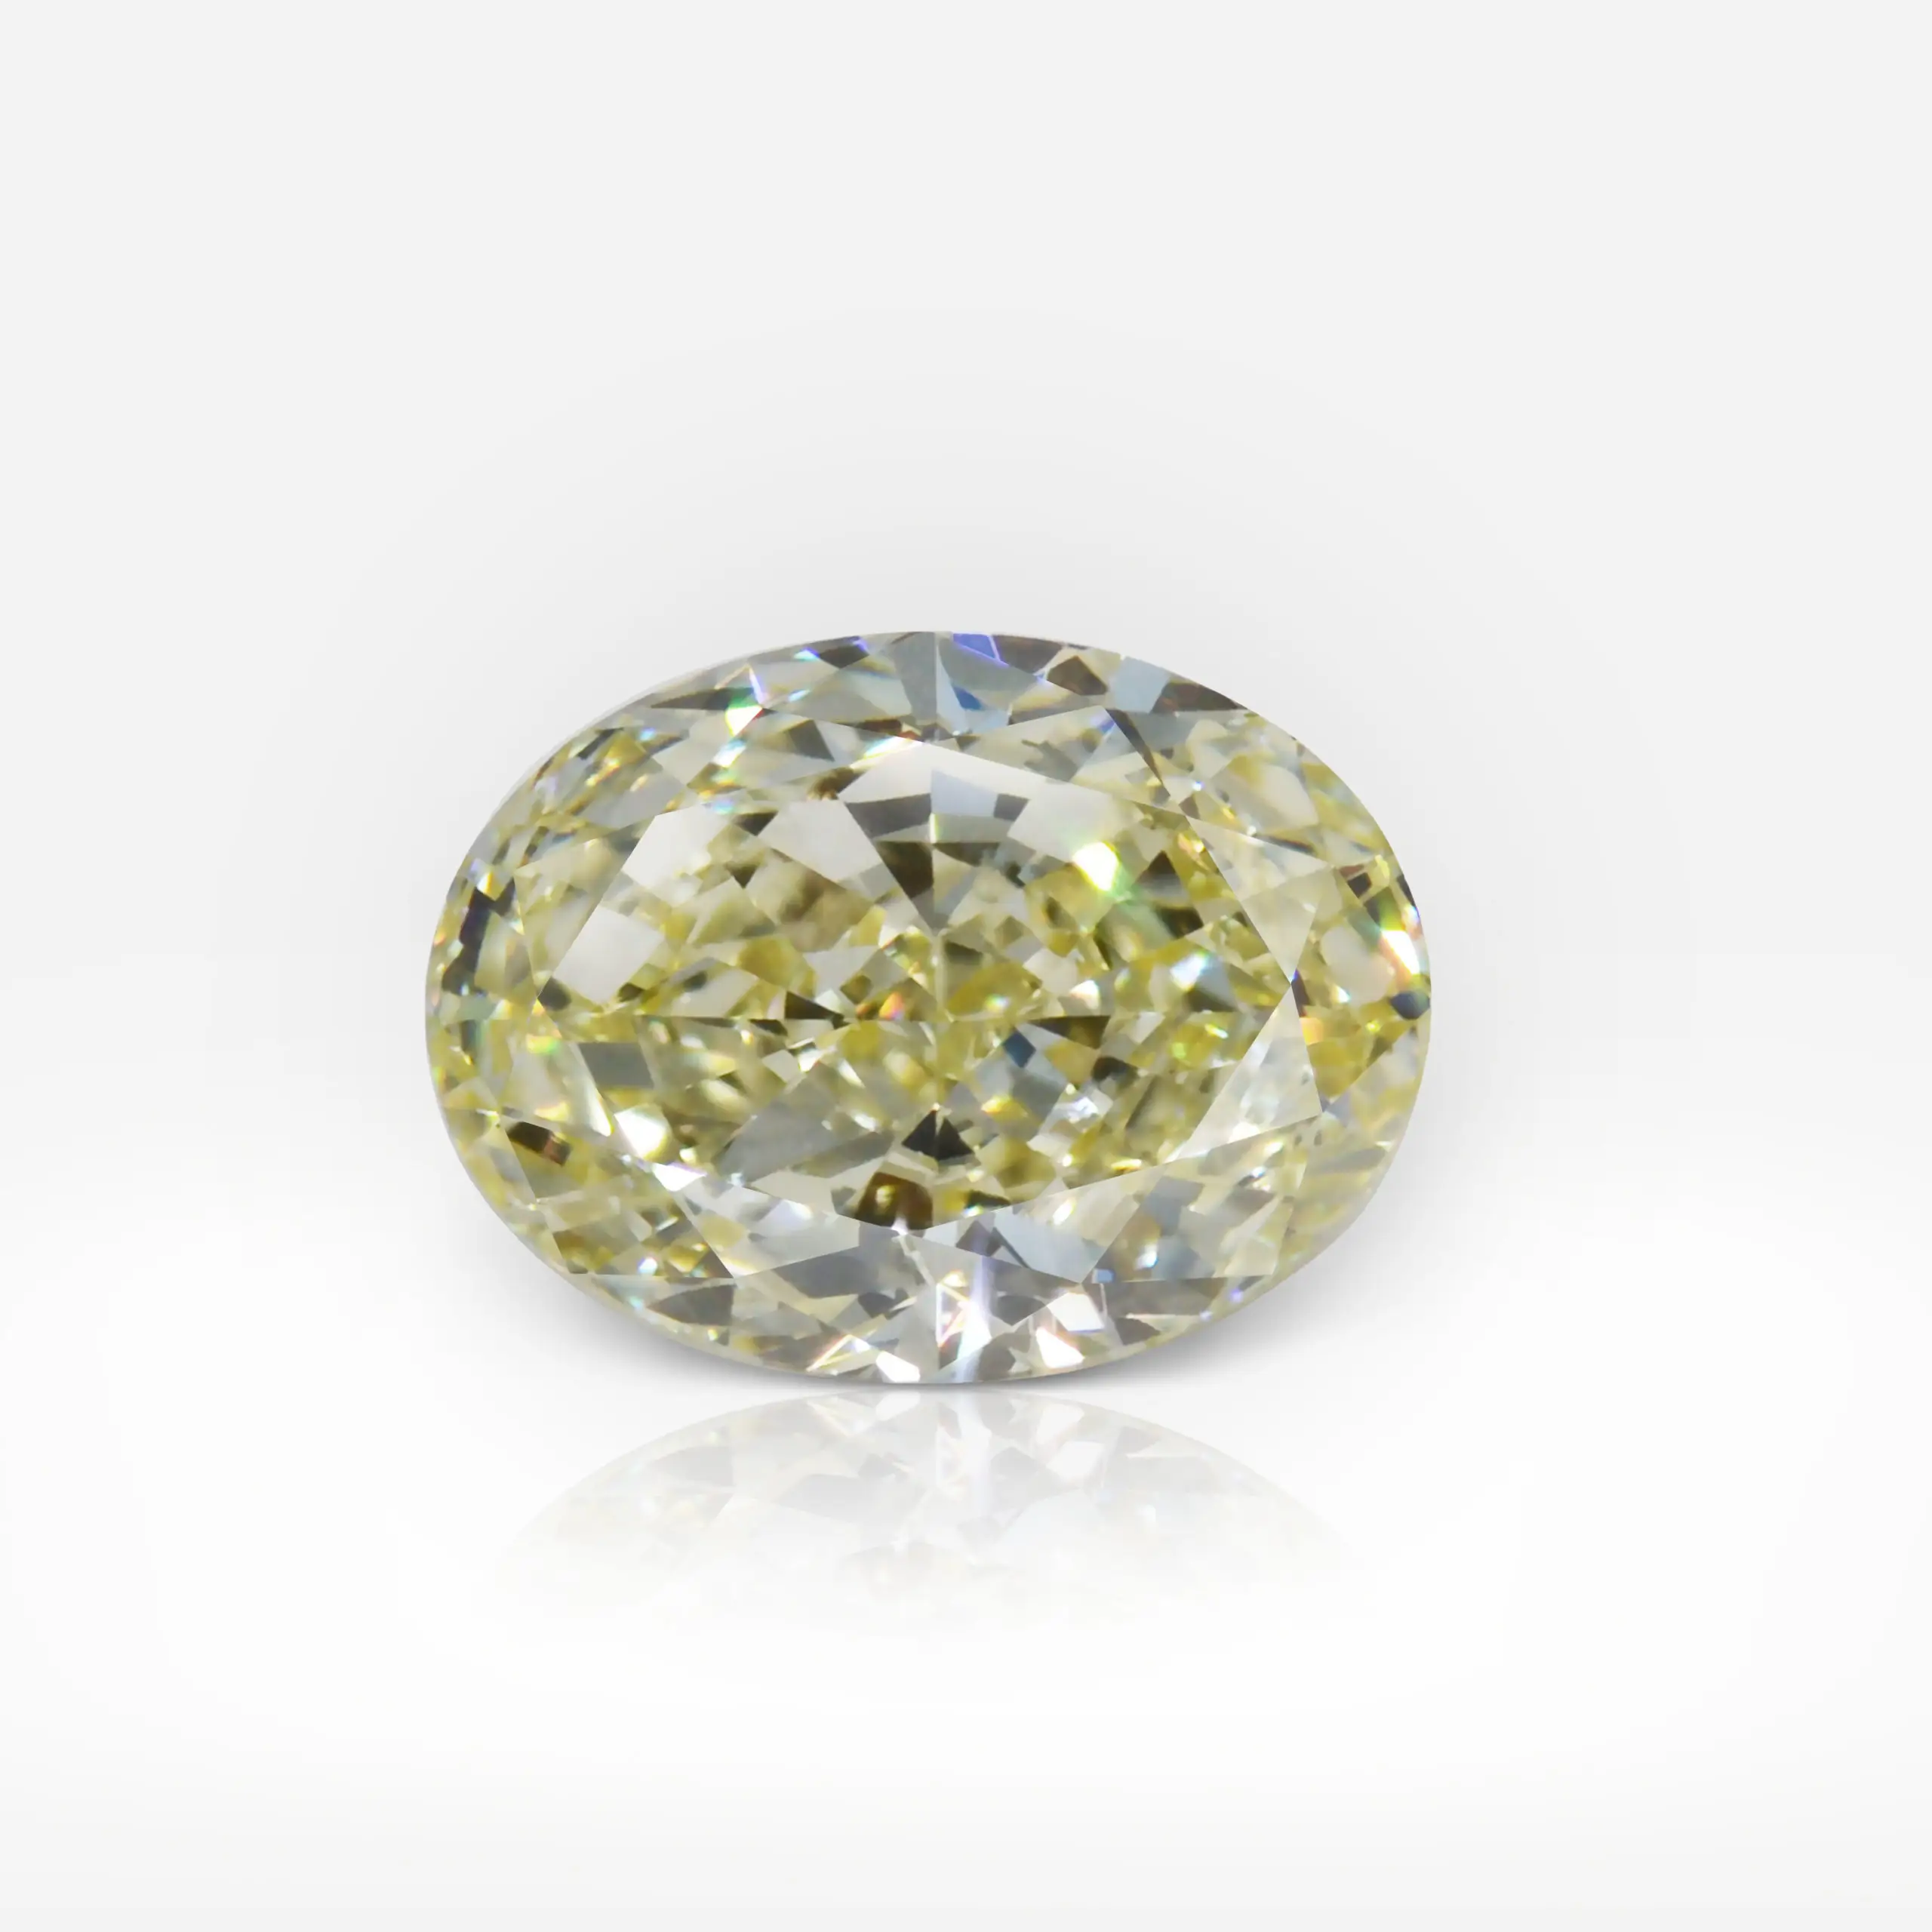 1.12 carat Fancy Light Yellow VS1 Oval Shape Diamond GIA - picture 1